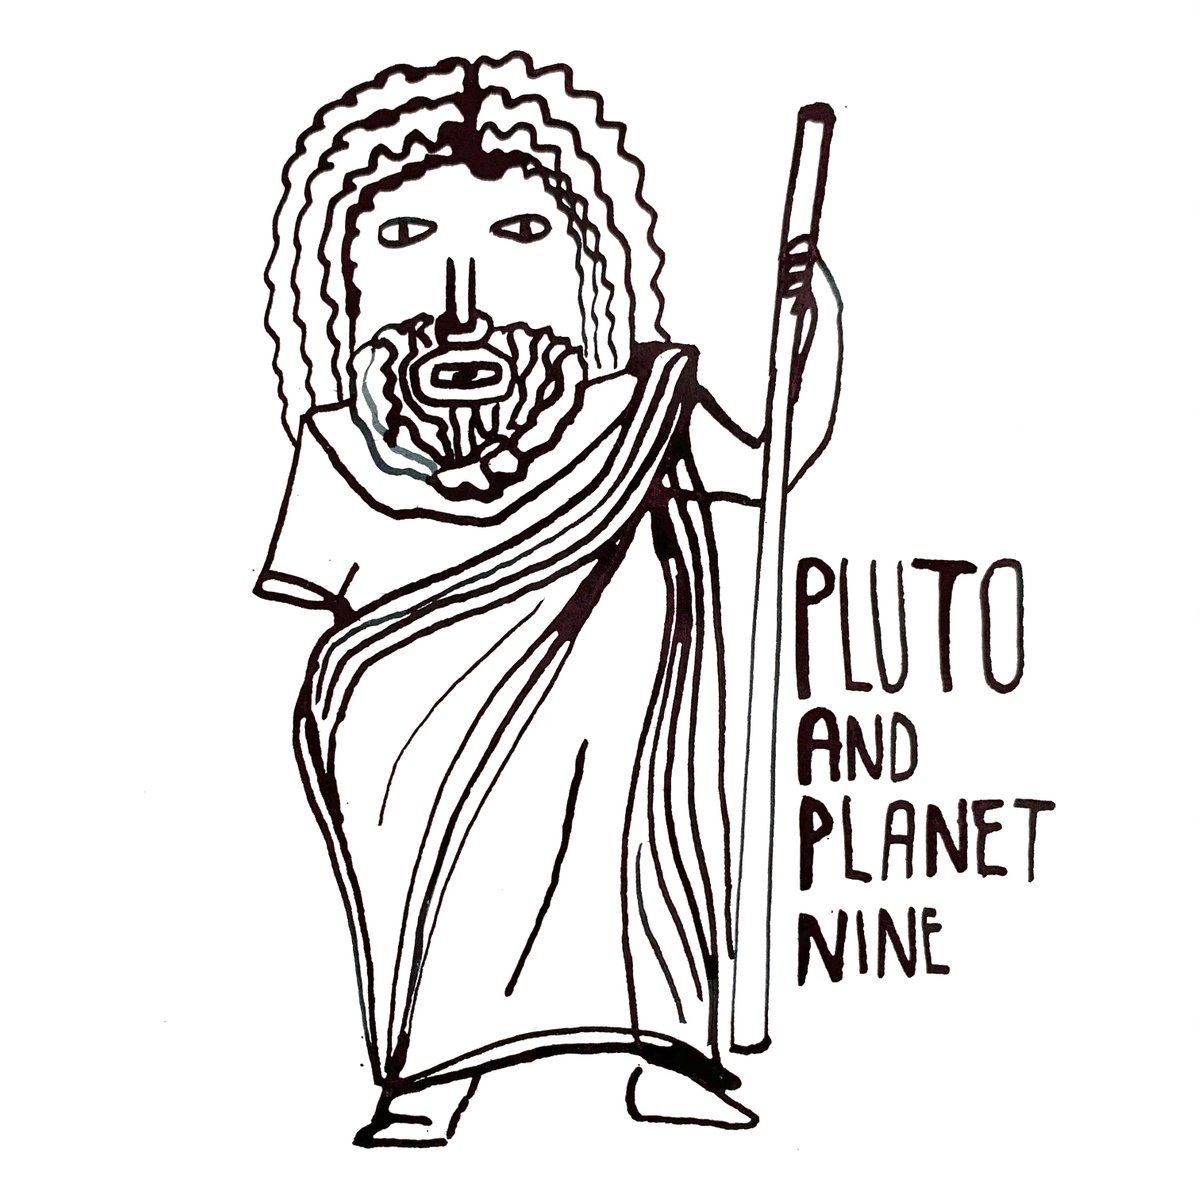 Pluto and Planet Nine by Nadim Basna